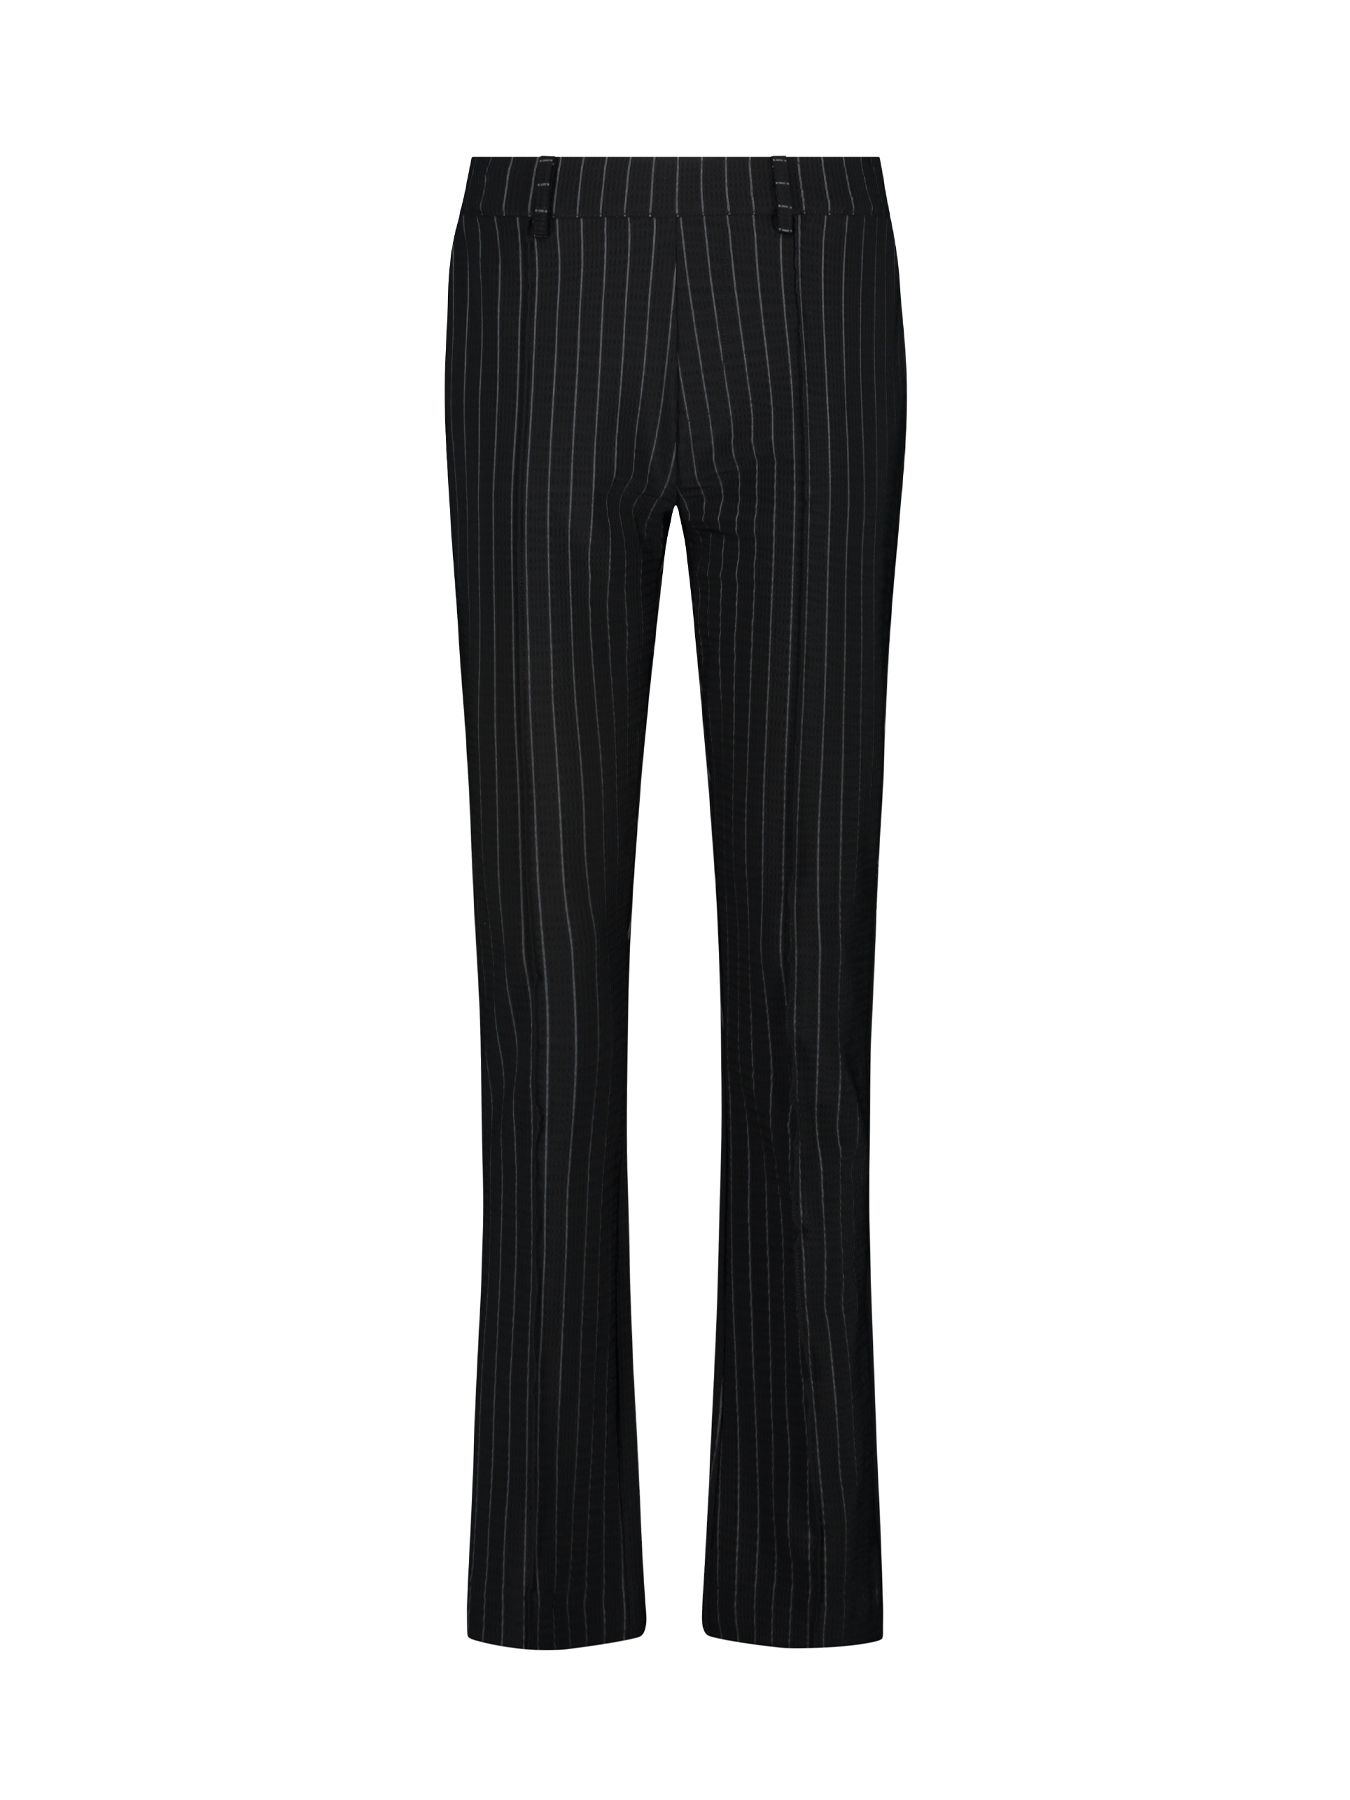 Tramontana Trousers Travel Pinstripe Black 009000 00102790-EKA26012900000001